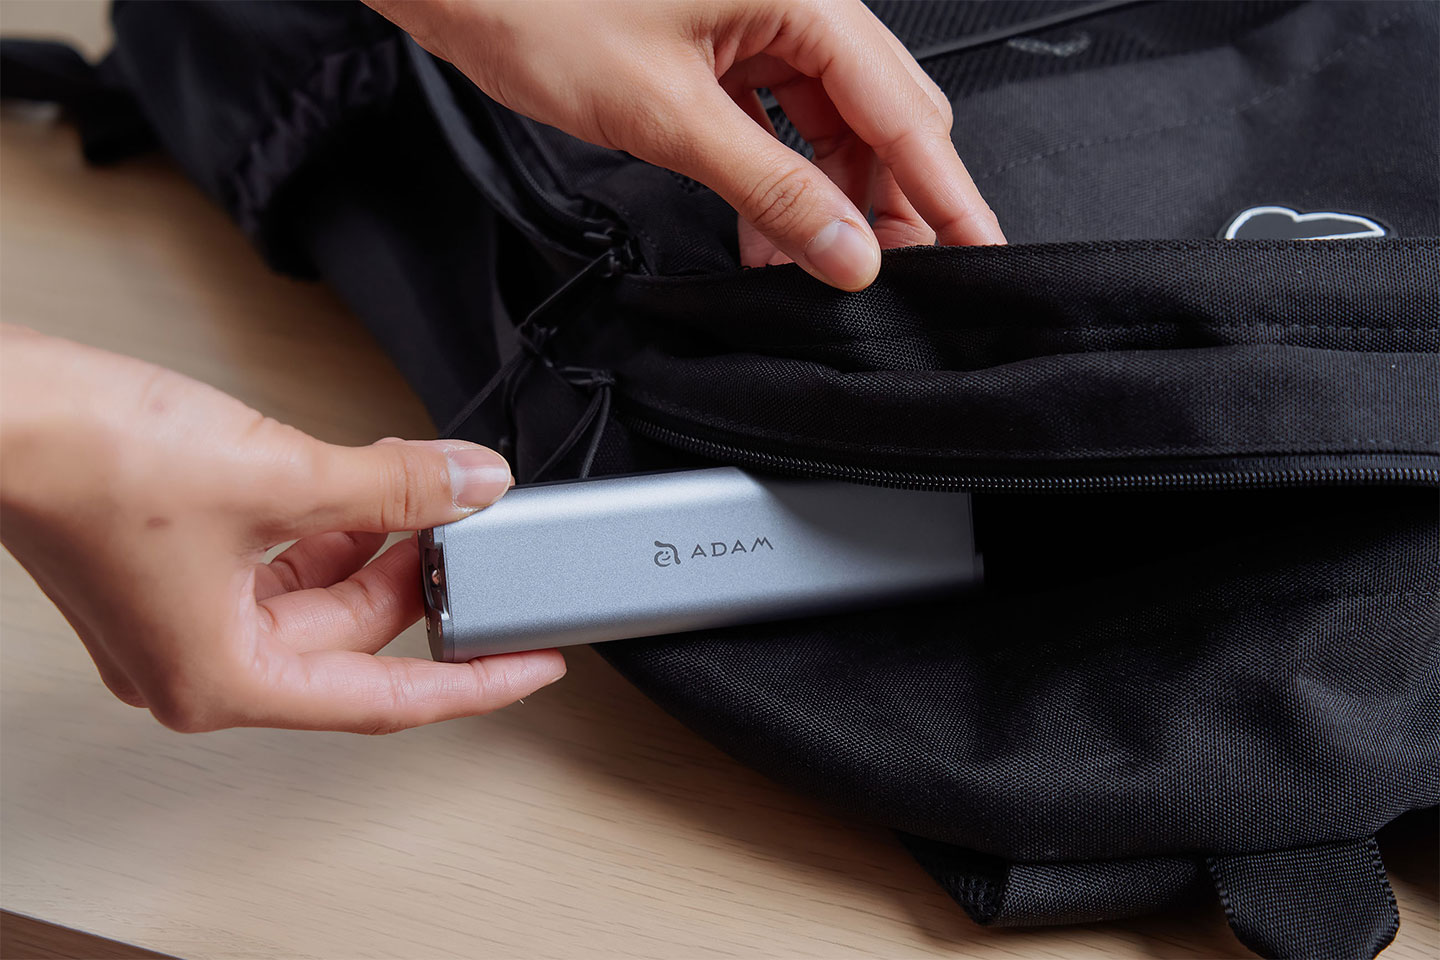 USB-C Hub 本體十分小巧，可以方便放入電包攜帶使用。